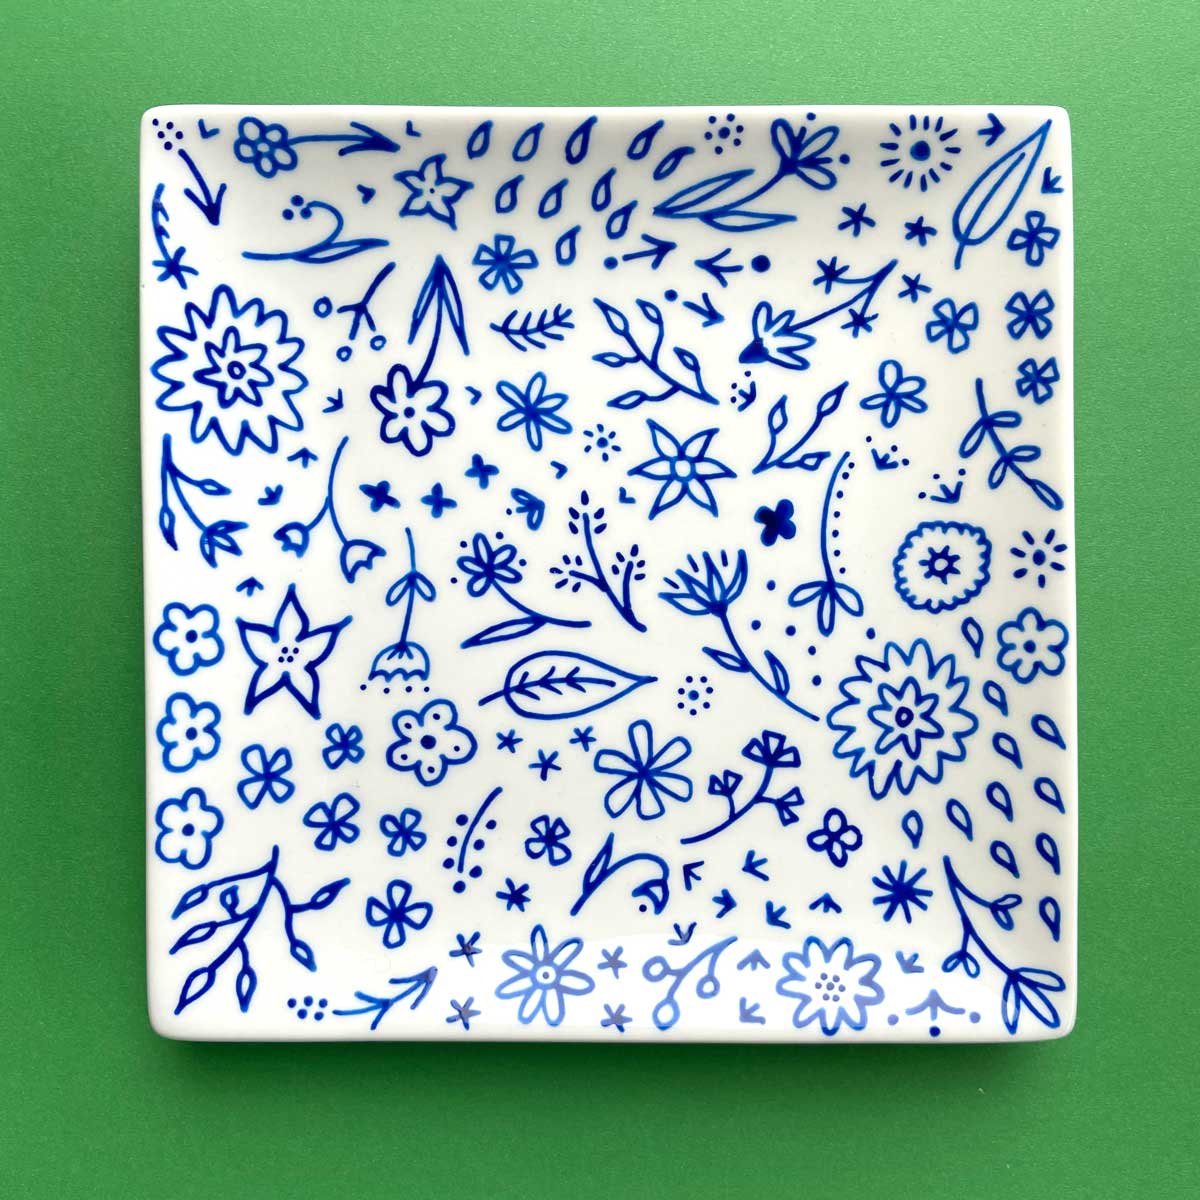 Blue Floral - Hand Painted Porcelain Square Plate